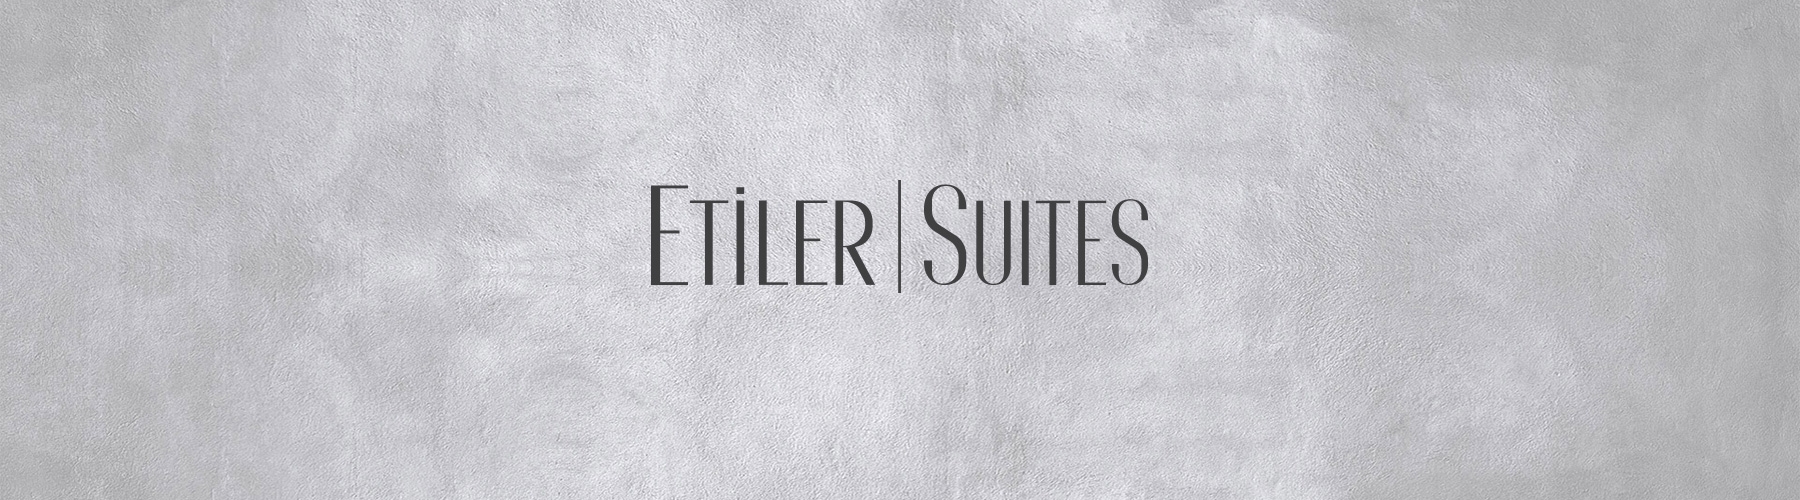 Etiler Suites